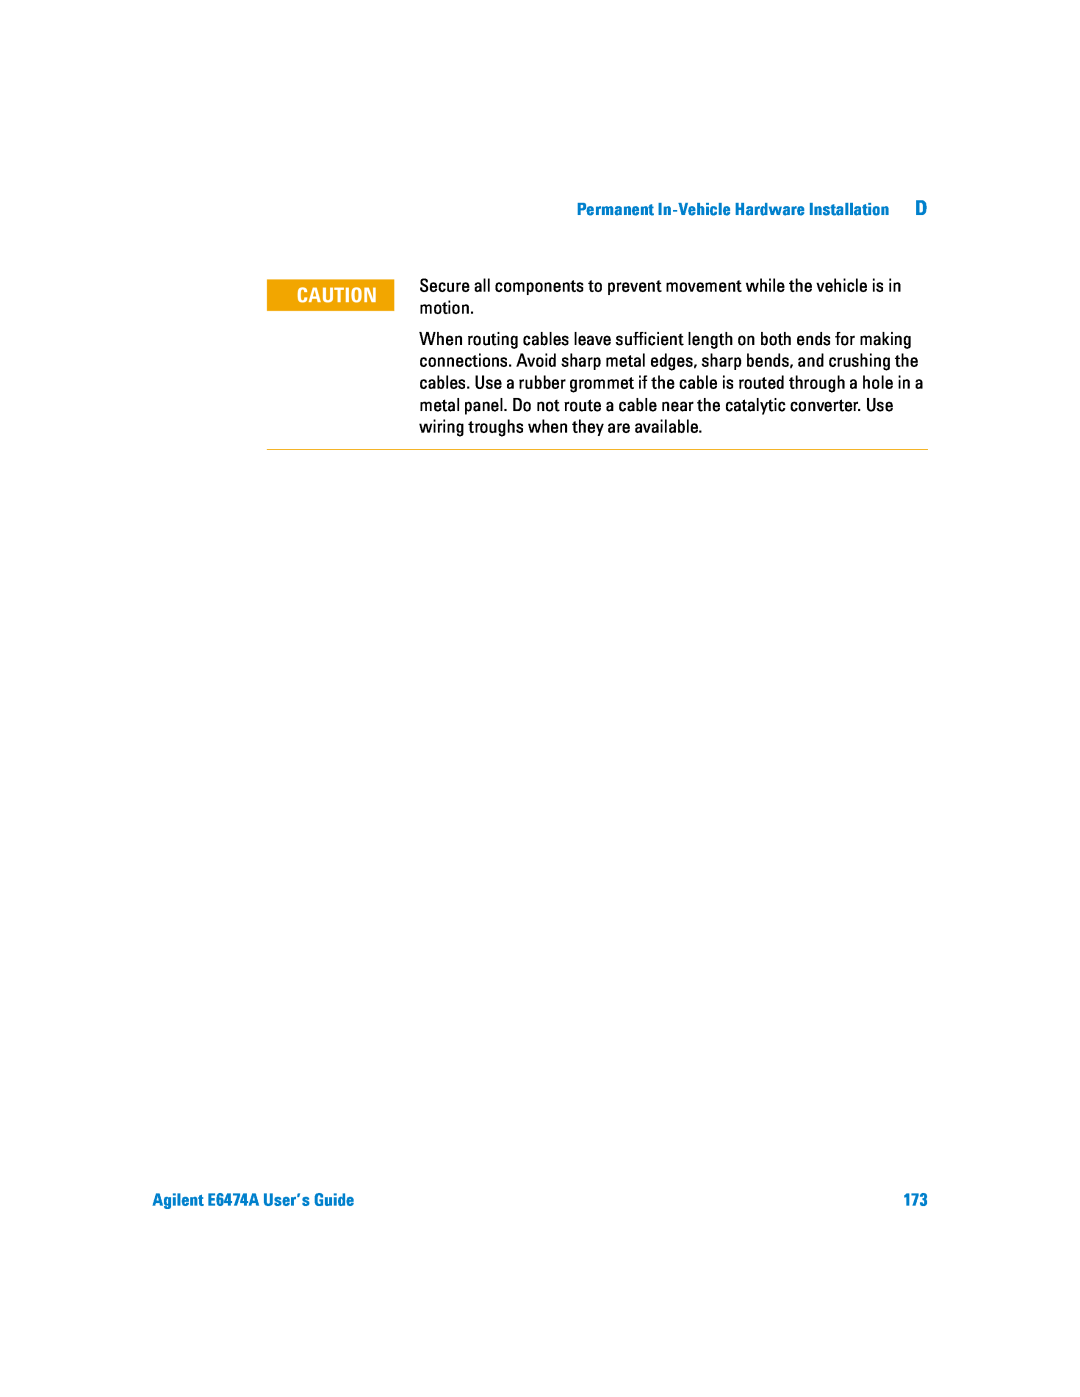 Agilent Technologies manual Permanent In-Vehicle Hardware Installation D, Agilent E6474A User’s Guide 